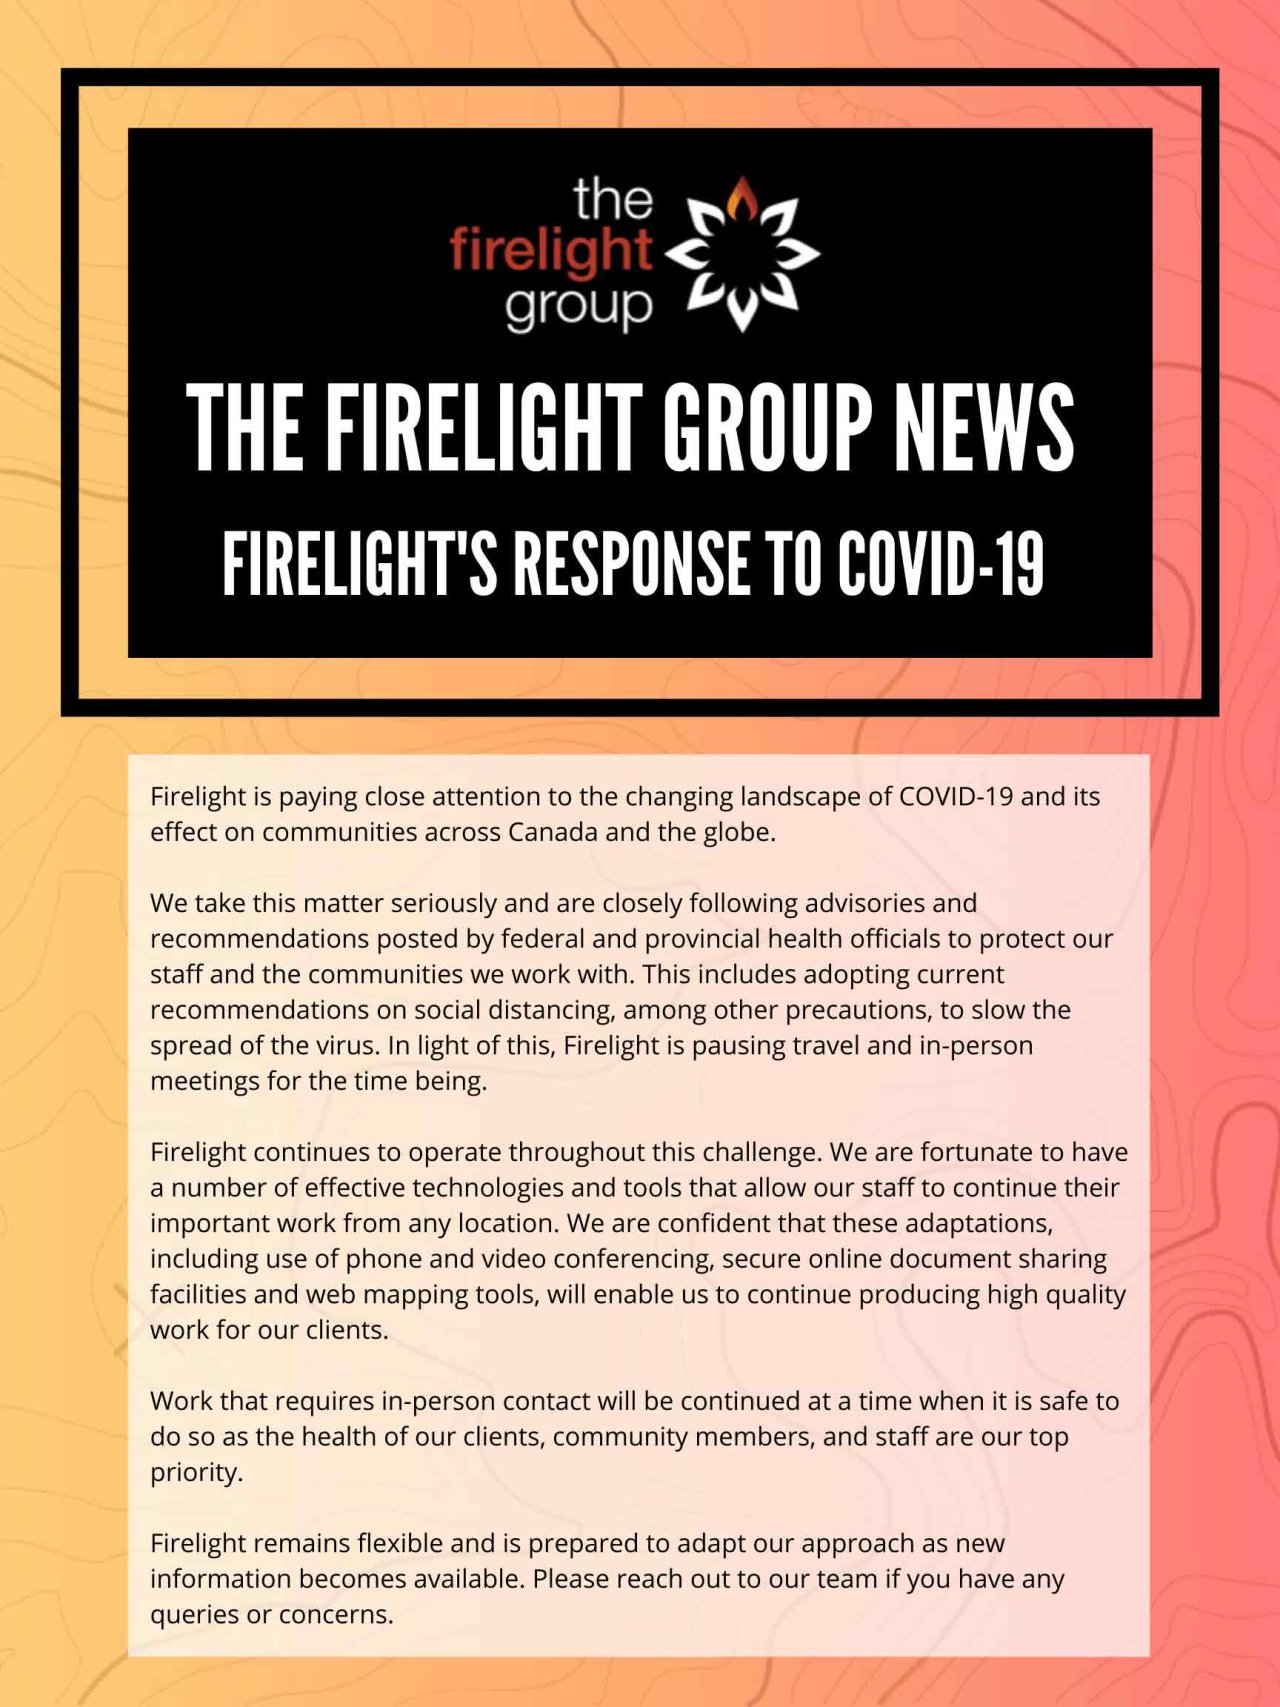 Firelight’s Response to COVID-19